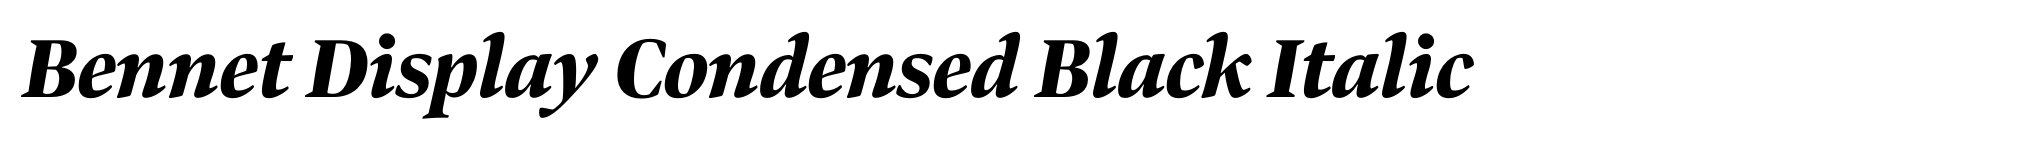 Bennet Display Condensed Black Italic image